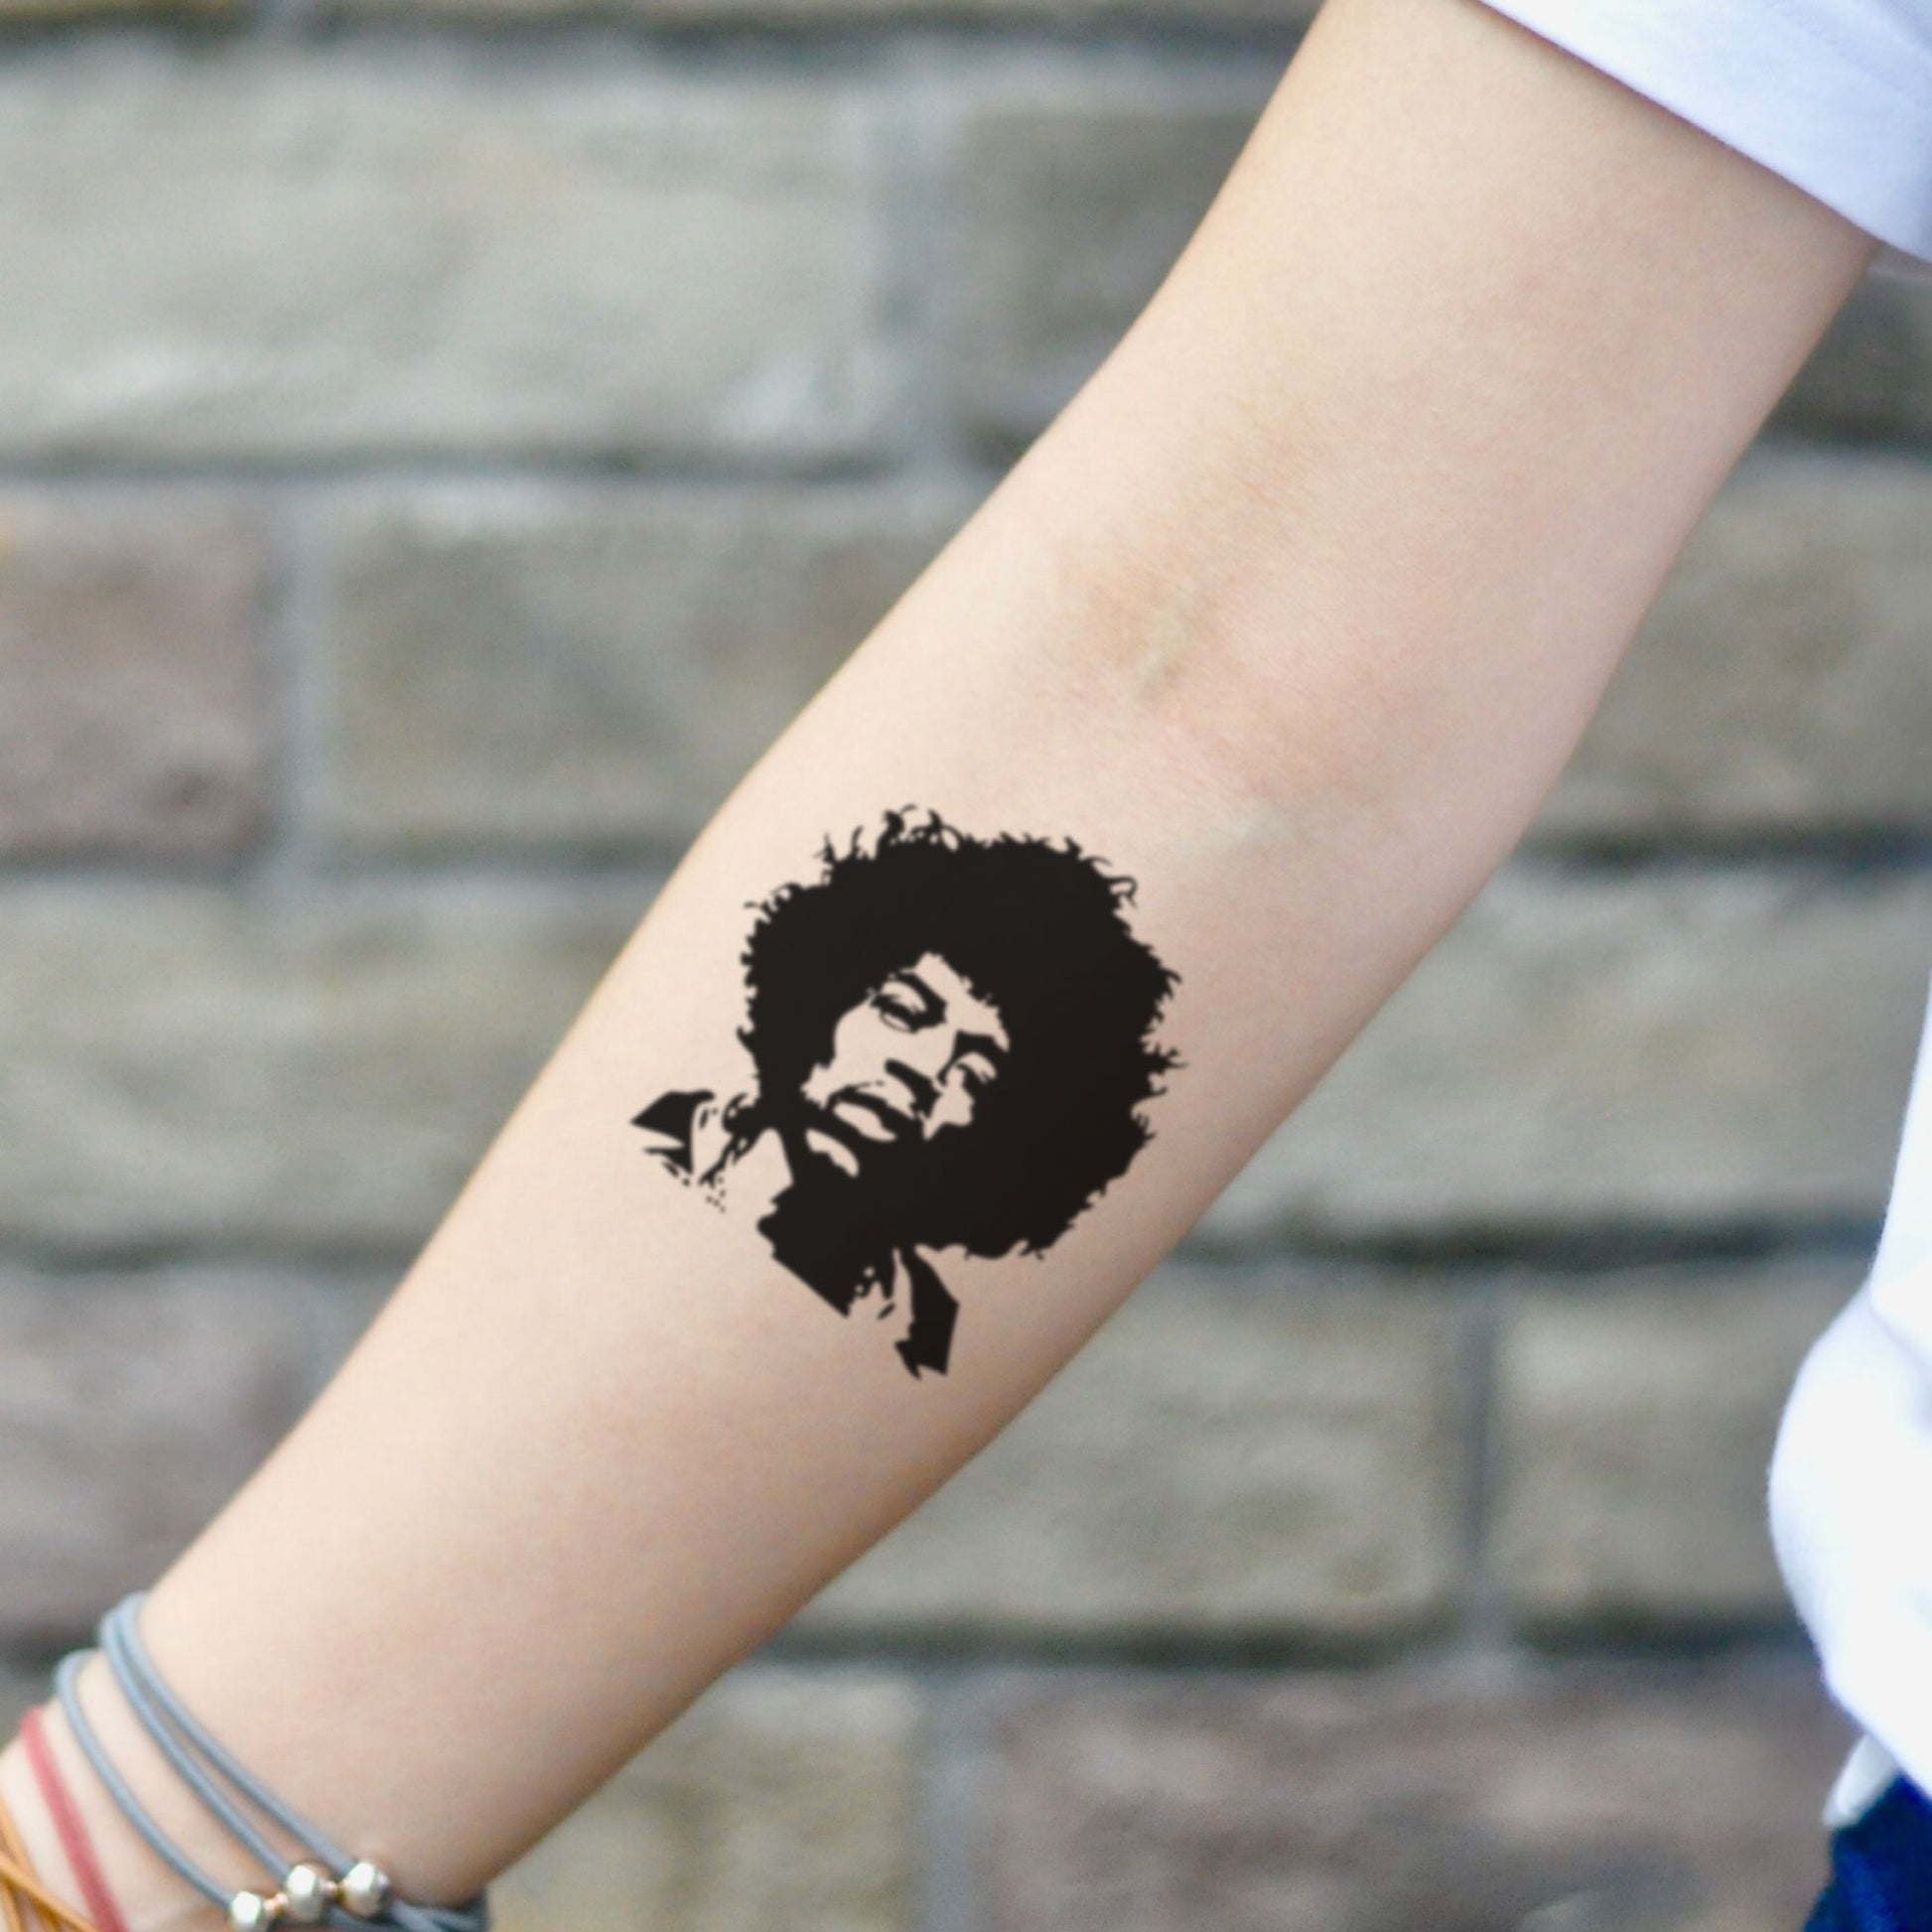 fake small jimi hendrix portrait temporary tattoo sticker design idea on inner arm